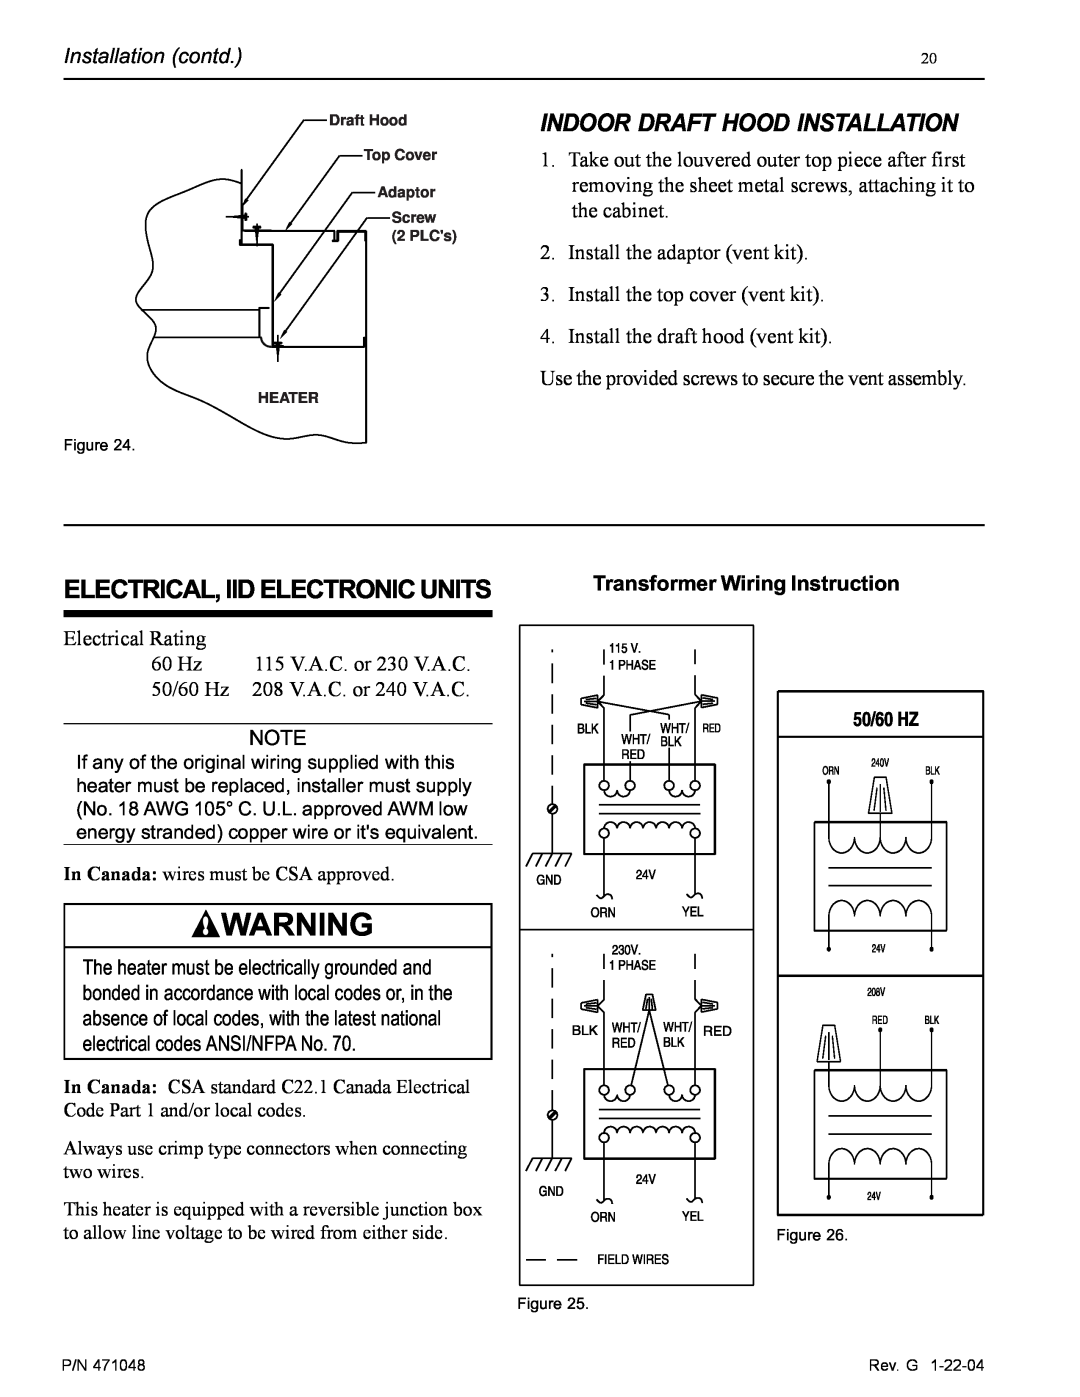 Pentair PowerMax installation manual Electrical, Iid Electronic Units, Indoor Draft Hood Installation, Installation contd 